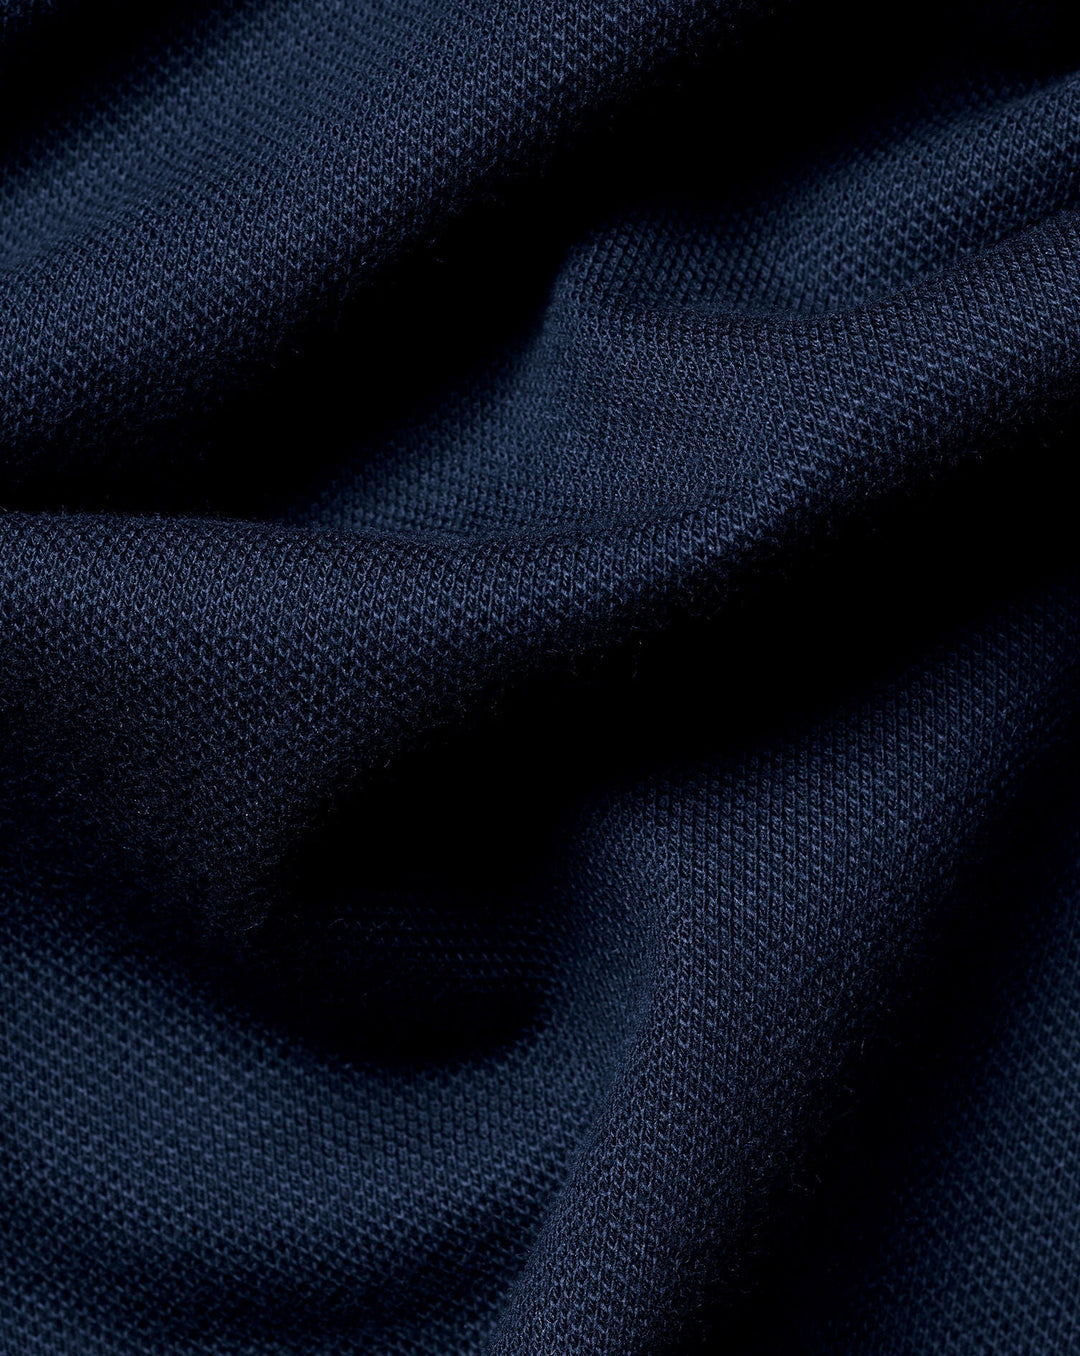 Navy Blue Solid Short Sleeve Cotton Tyrwhitt Pique Polo